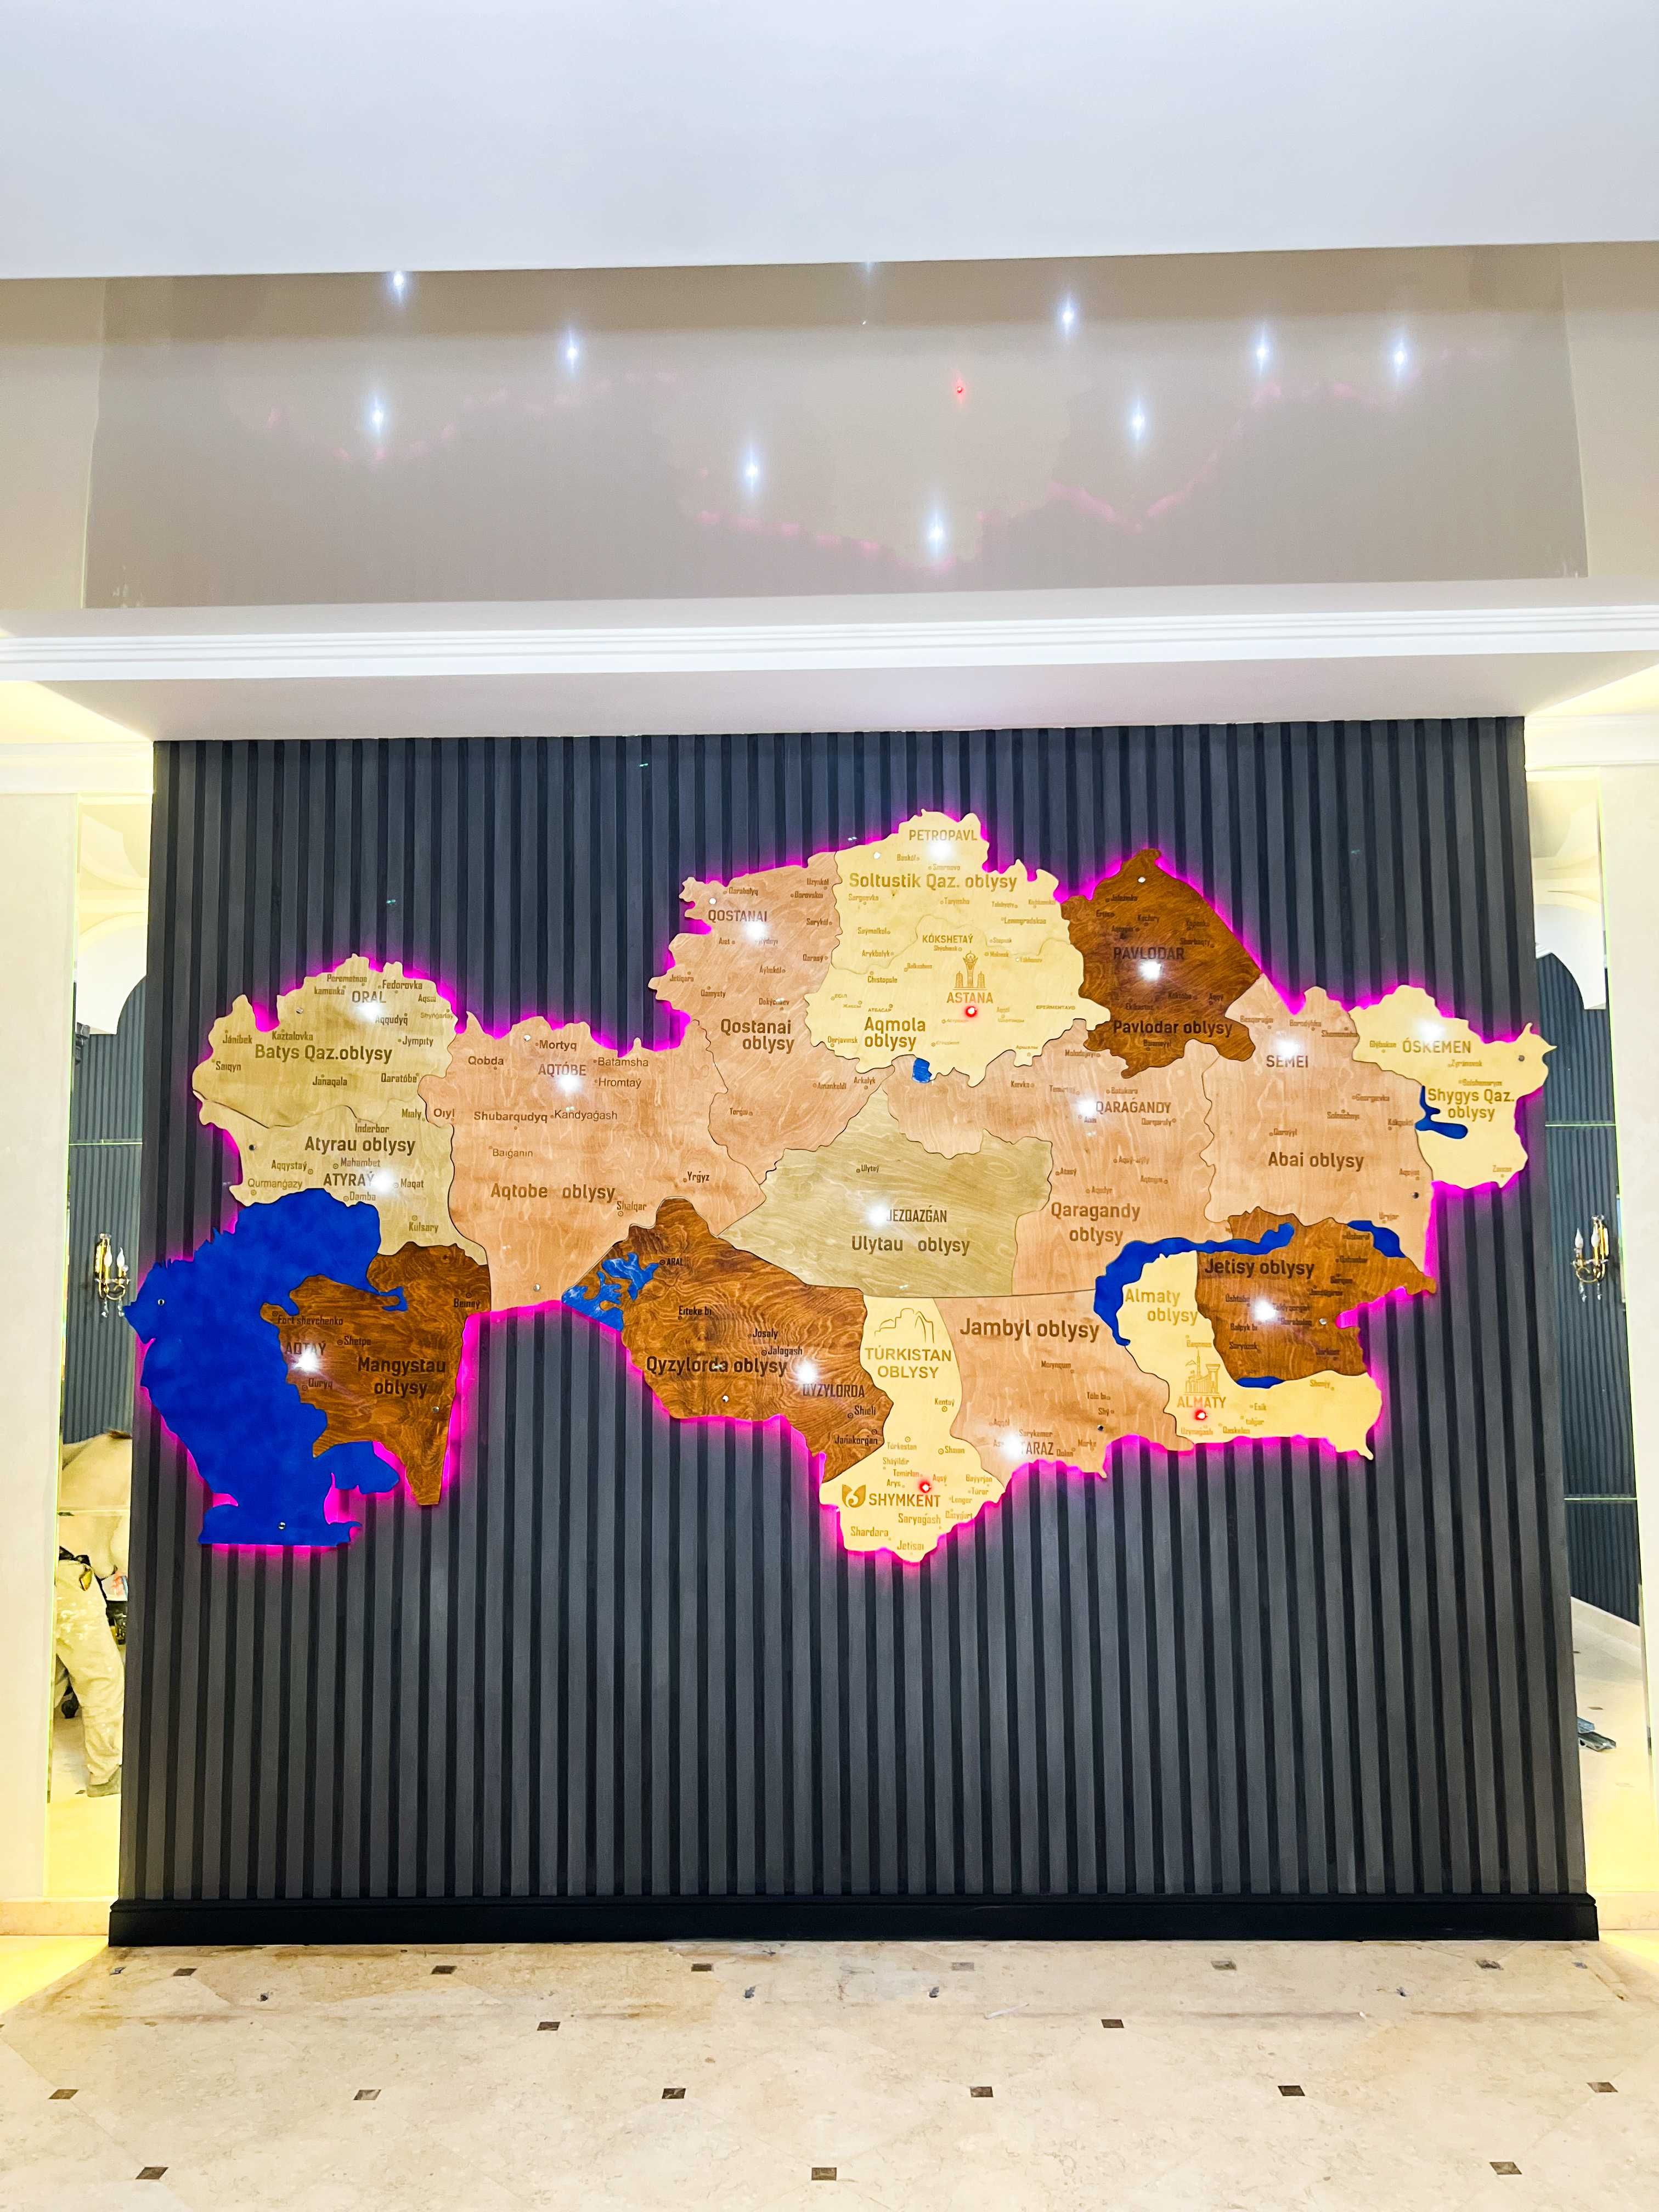 Ағаштан Қазақстан картасы Карта Казахстана из дерево